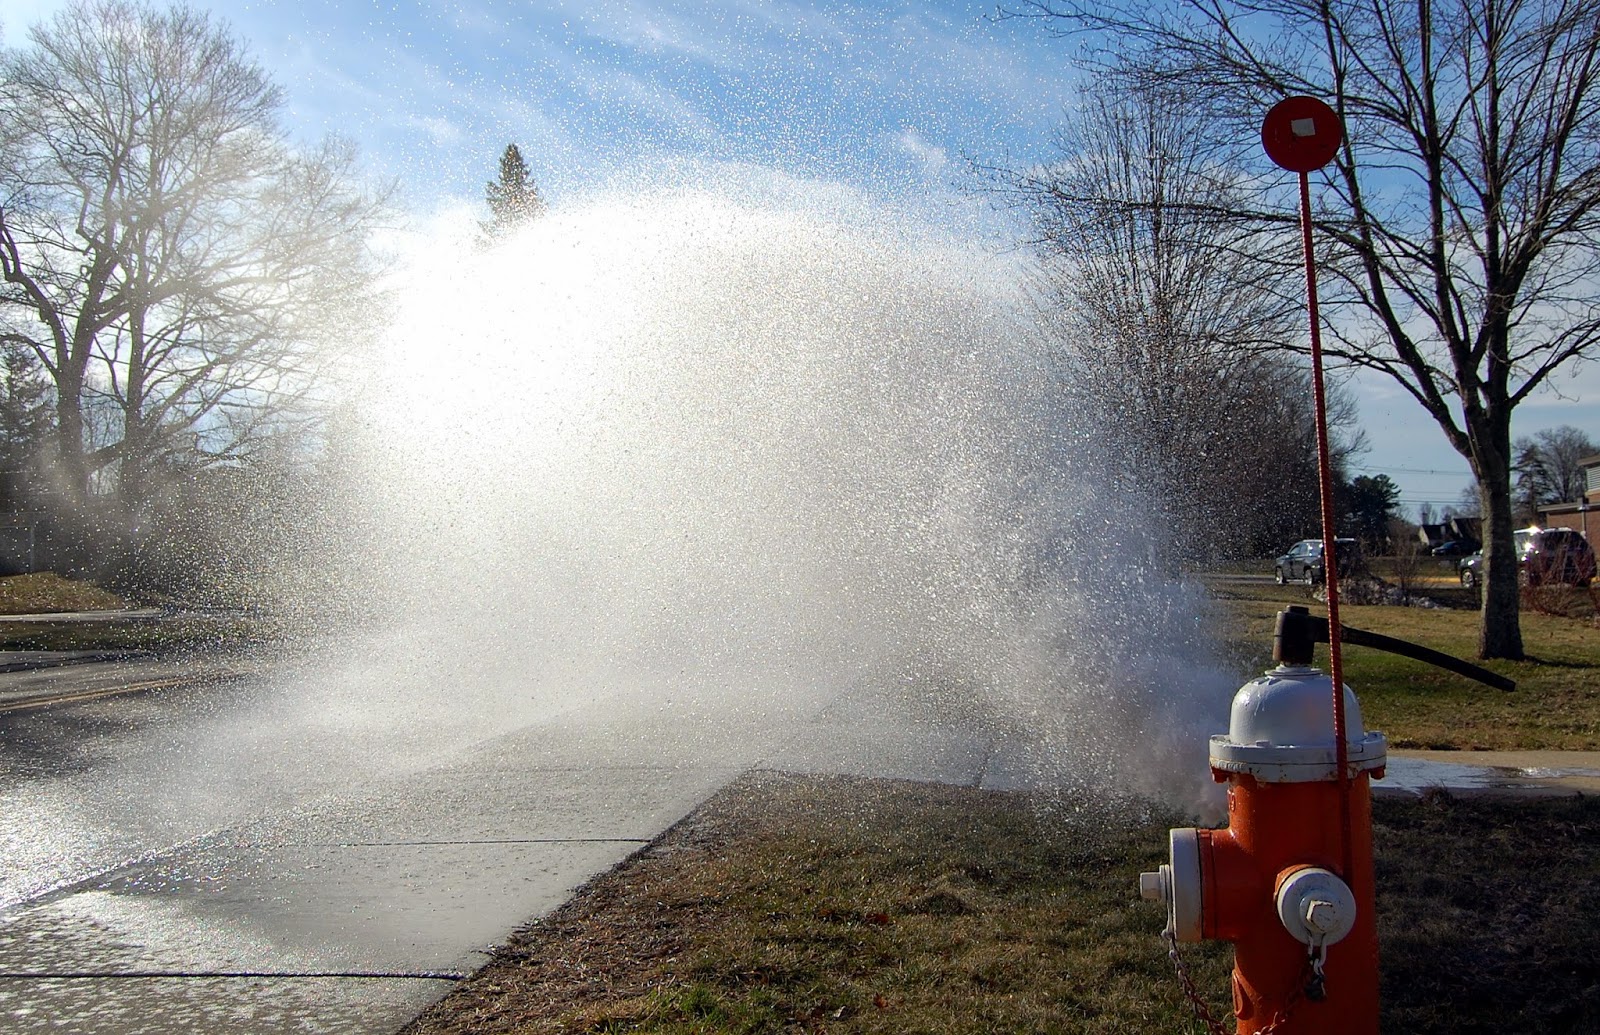 hydrant flushing at Parmenter School